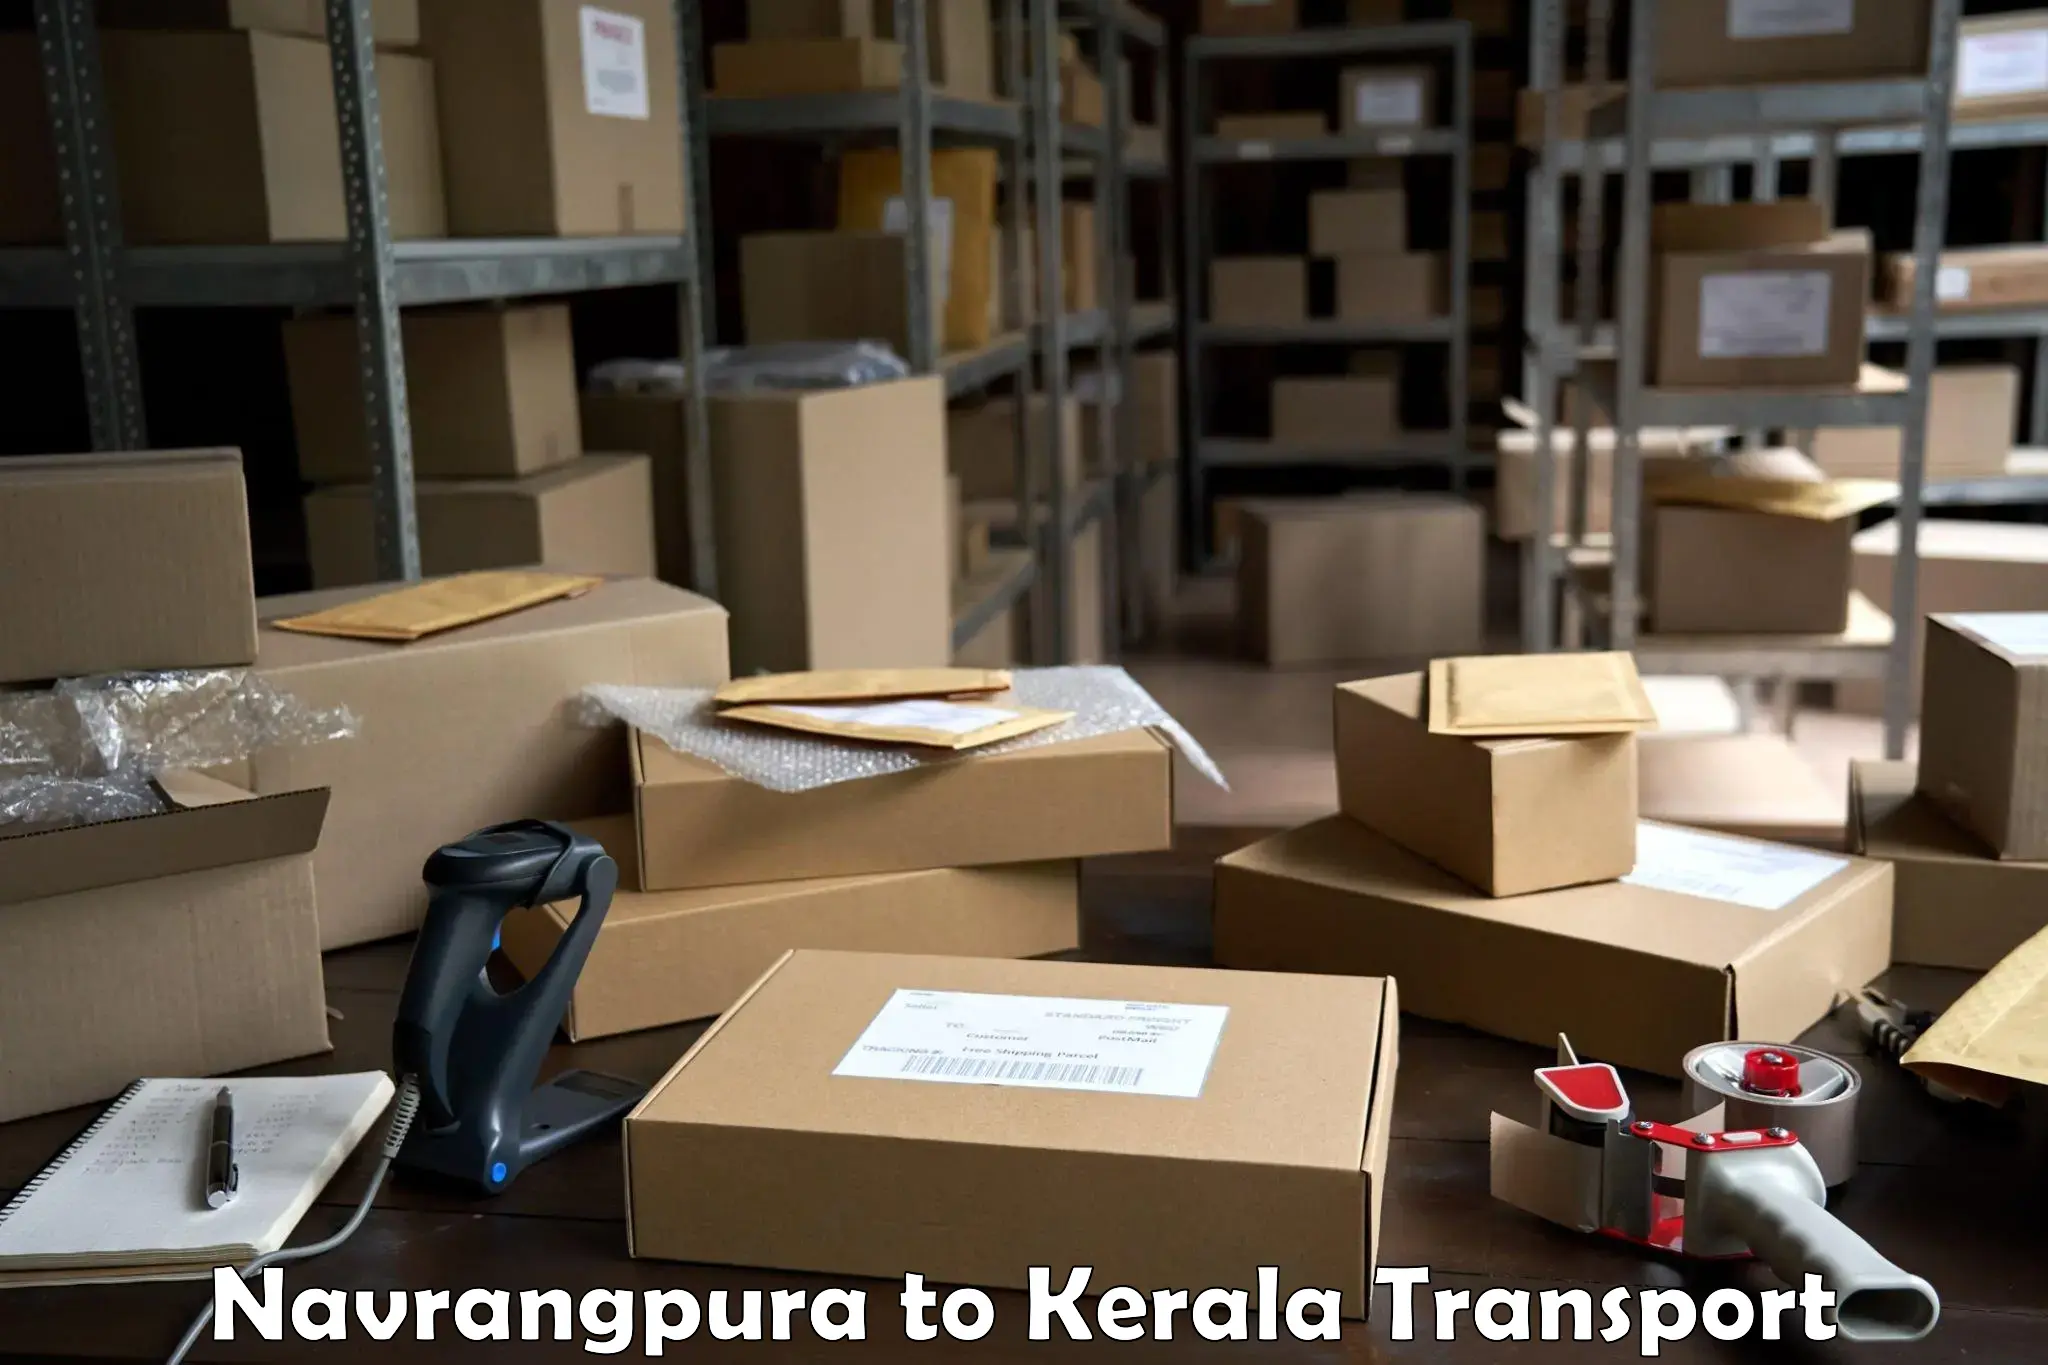 Shipping partner Navrangpura to Kerala